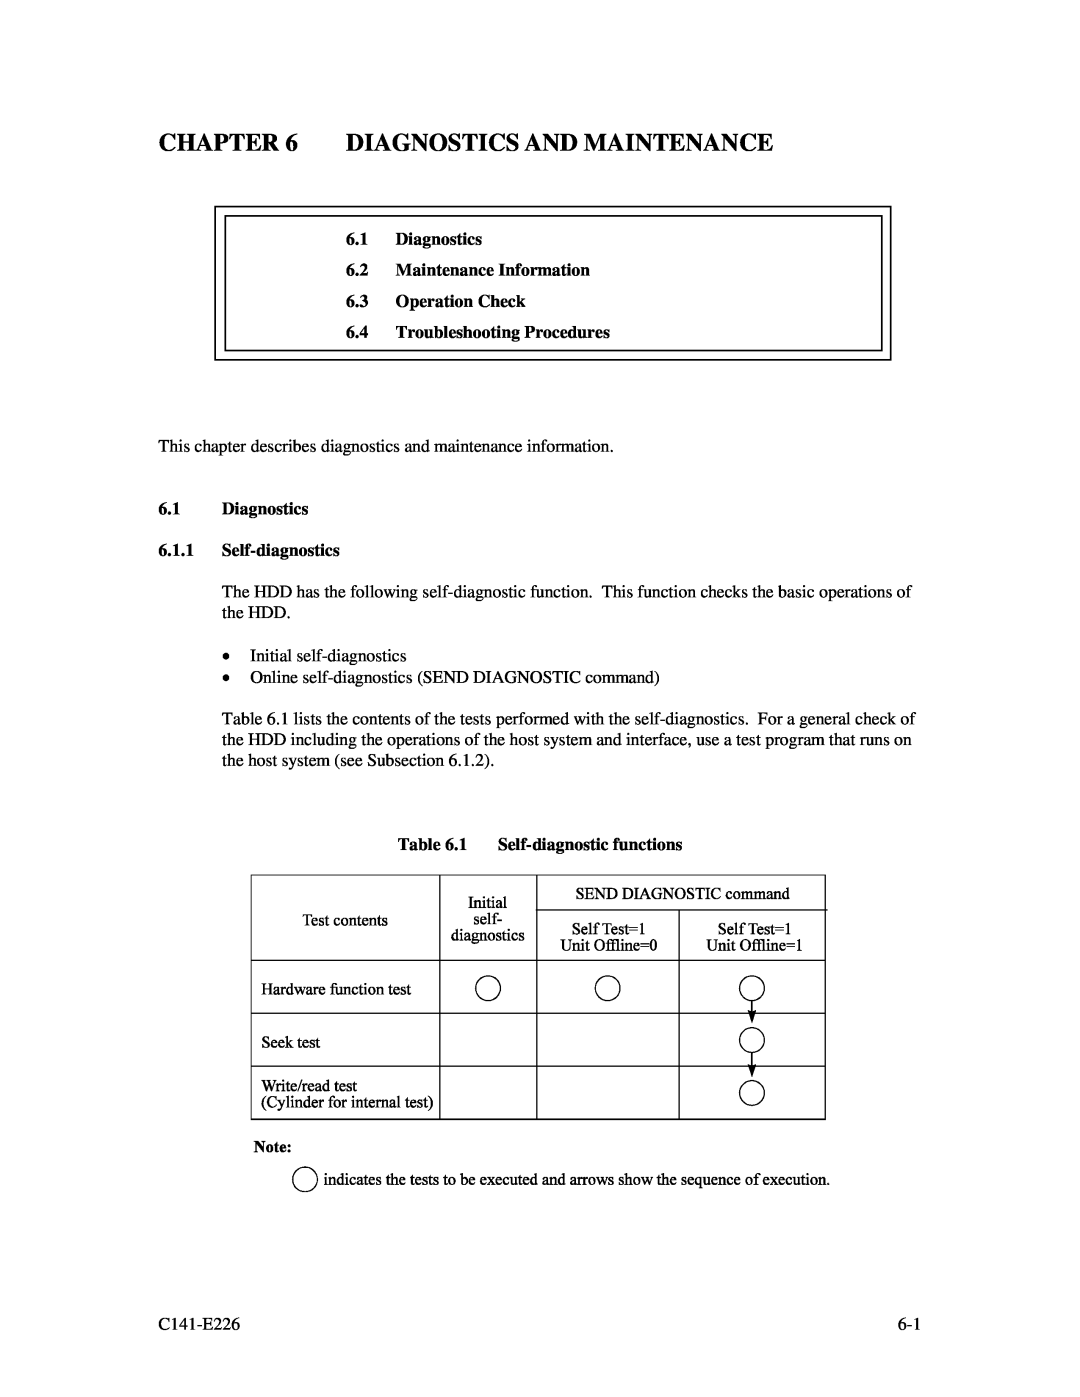 Fujitsu MAW3073NC/NP manual Diagnostics And Maintenance, Diagnostics 6.2 Maintenance Information 6.3 Operation Check 